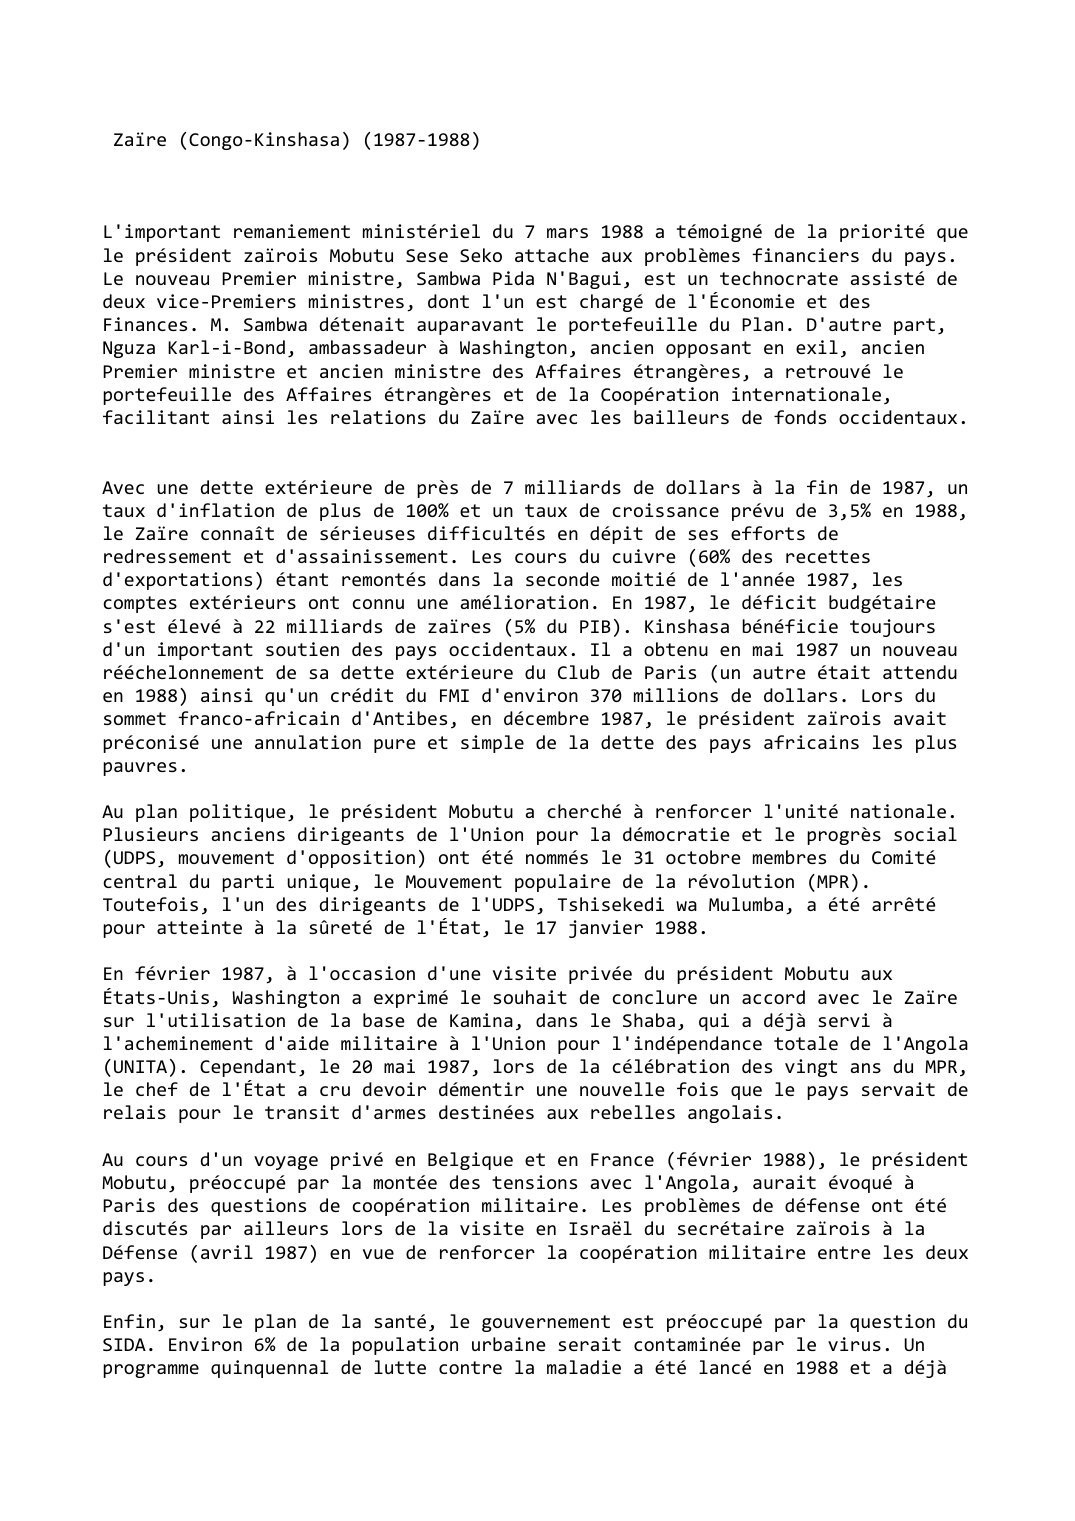 Prévisualisation du document Zaïre (Congo-Kinshasa) (1987-1988)